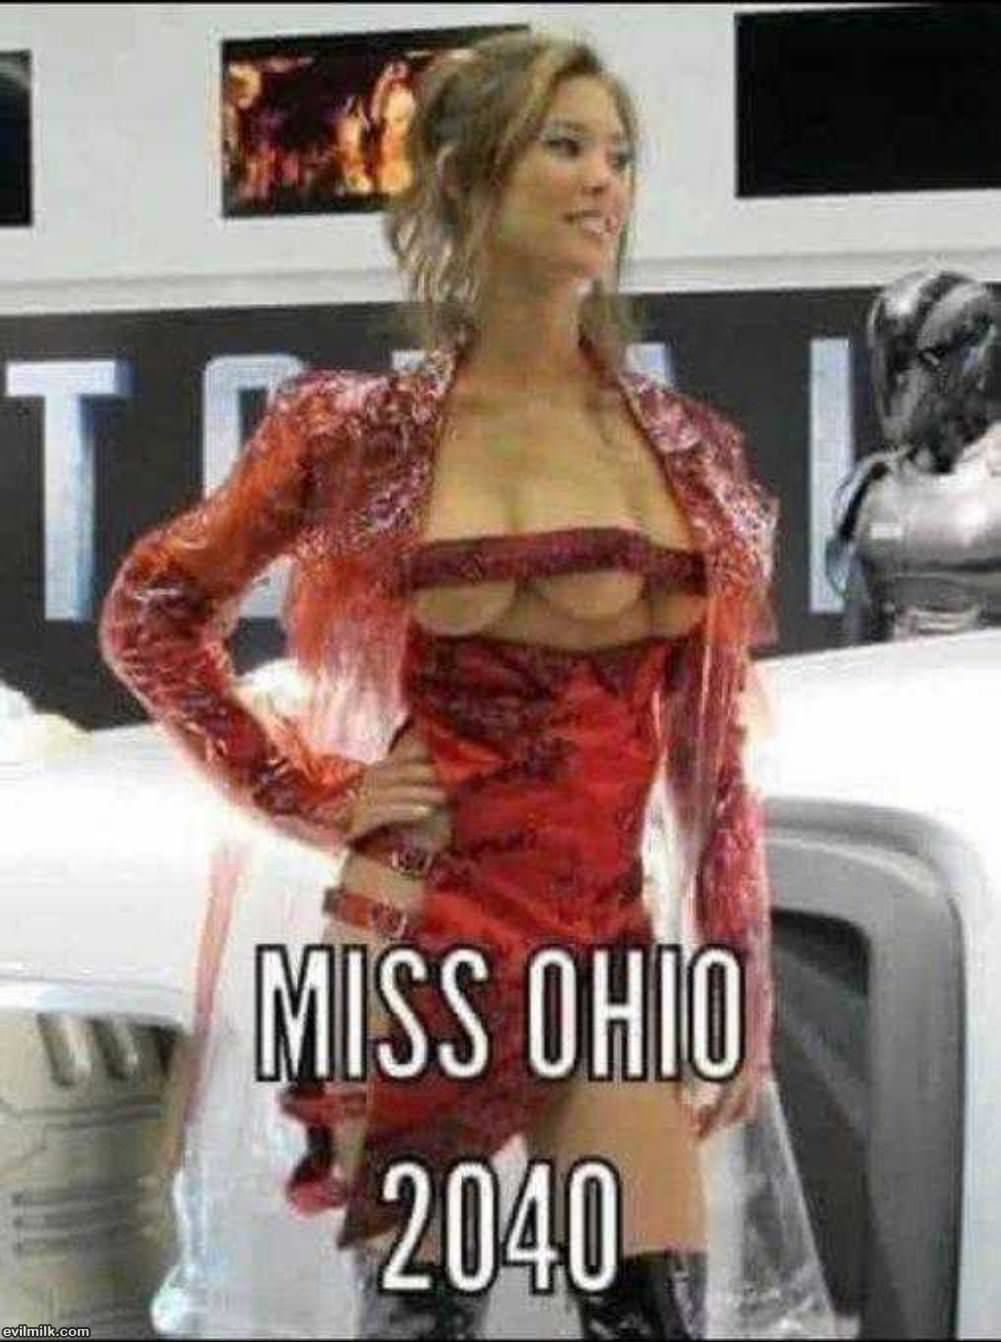 Miss Ohio